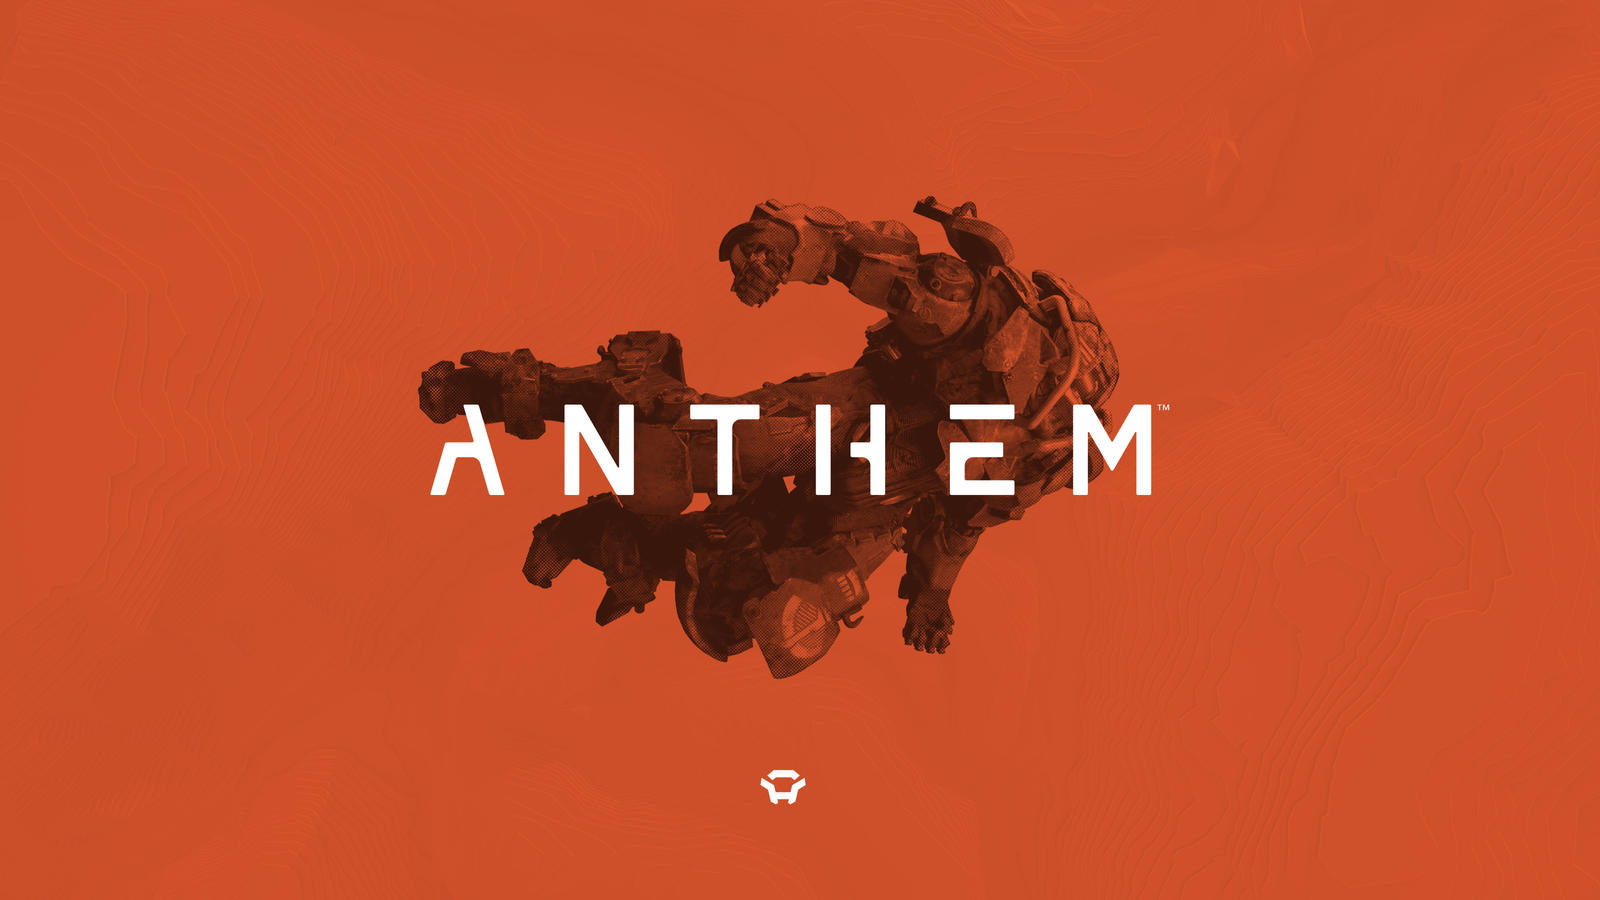 Anthem Javelin 4k Wallpaper by acTurul on DeviantArt